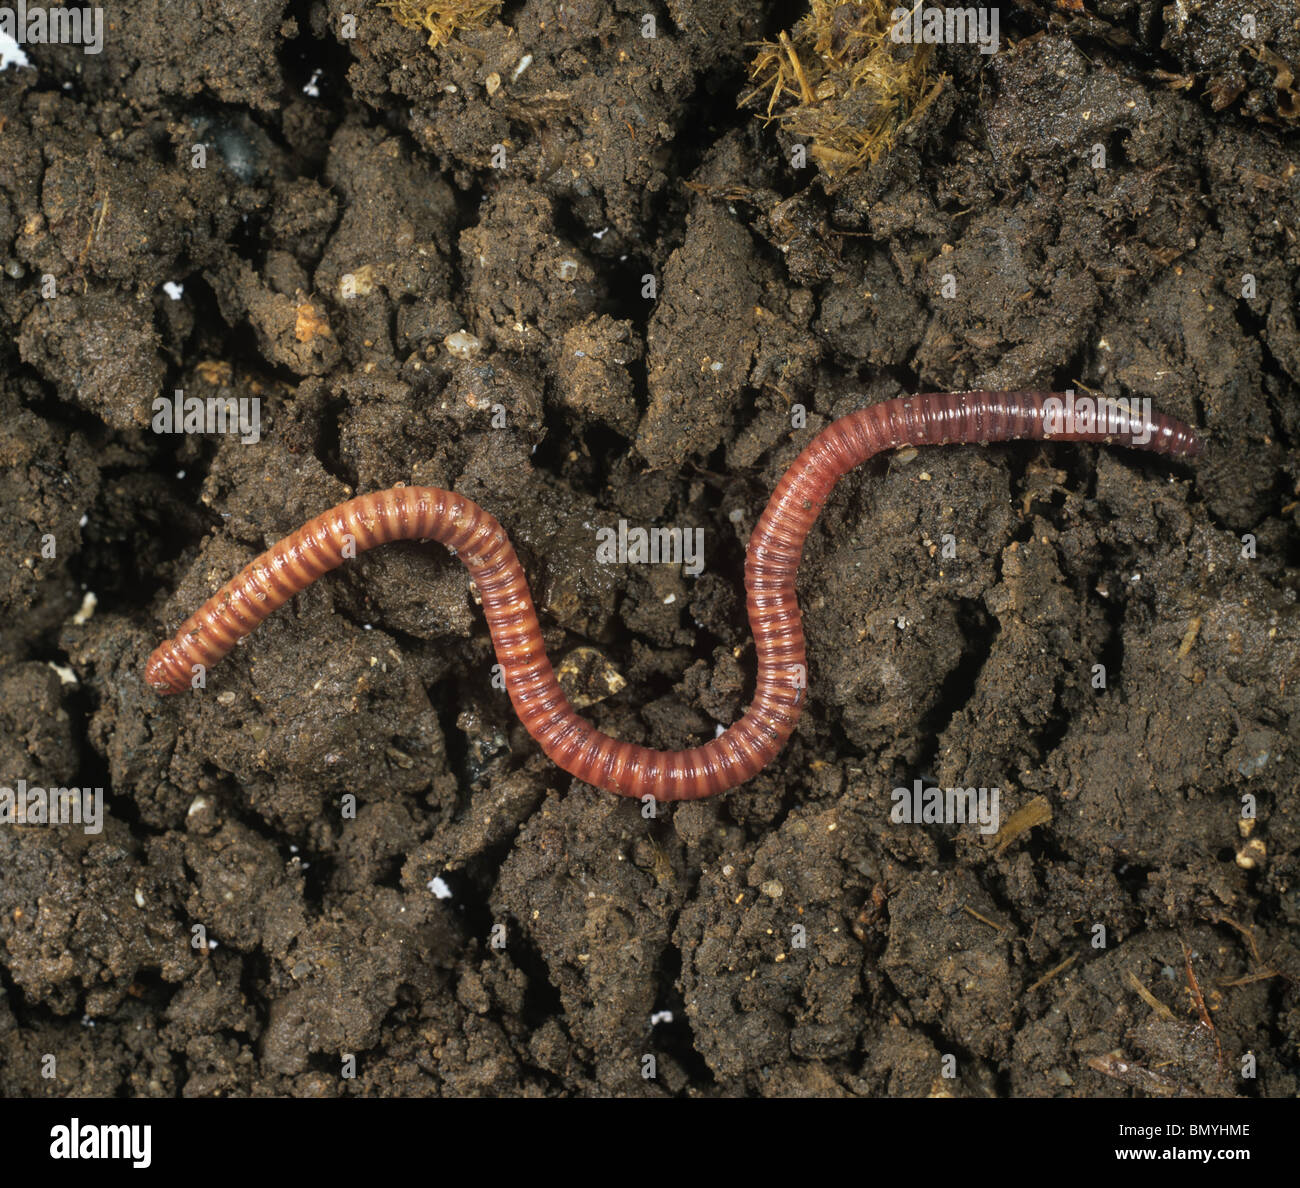 Redworm, brandling or tiger worm (Eisenia foetida) on soil surface Stock Photo